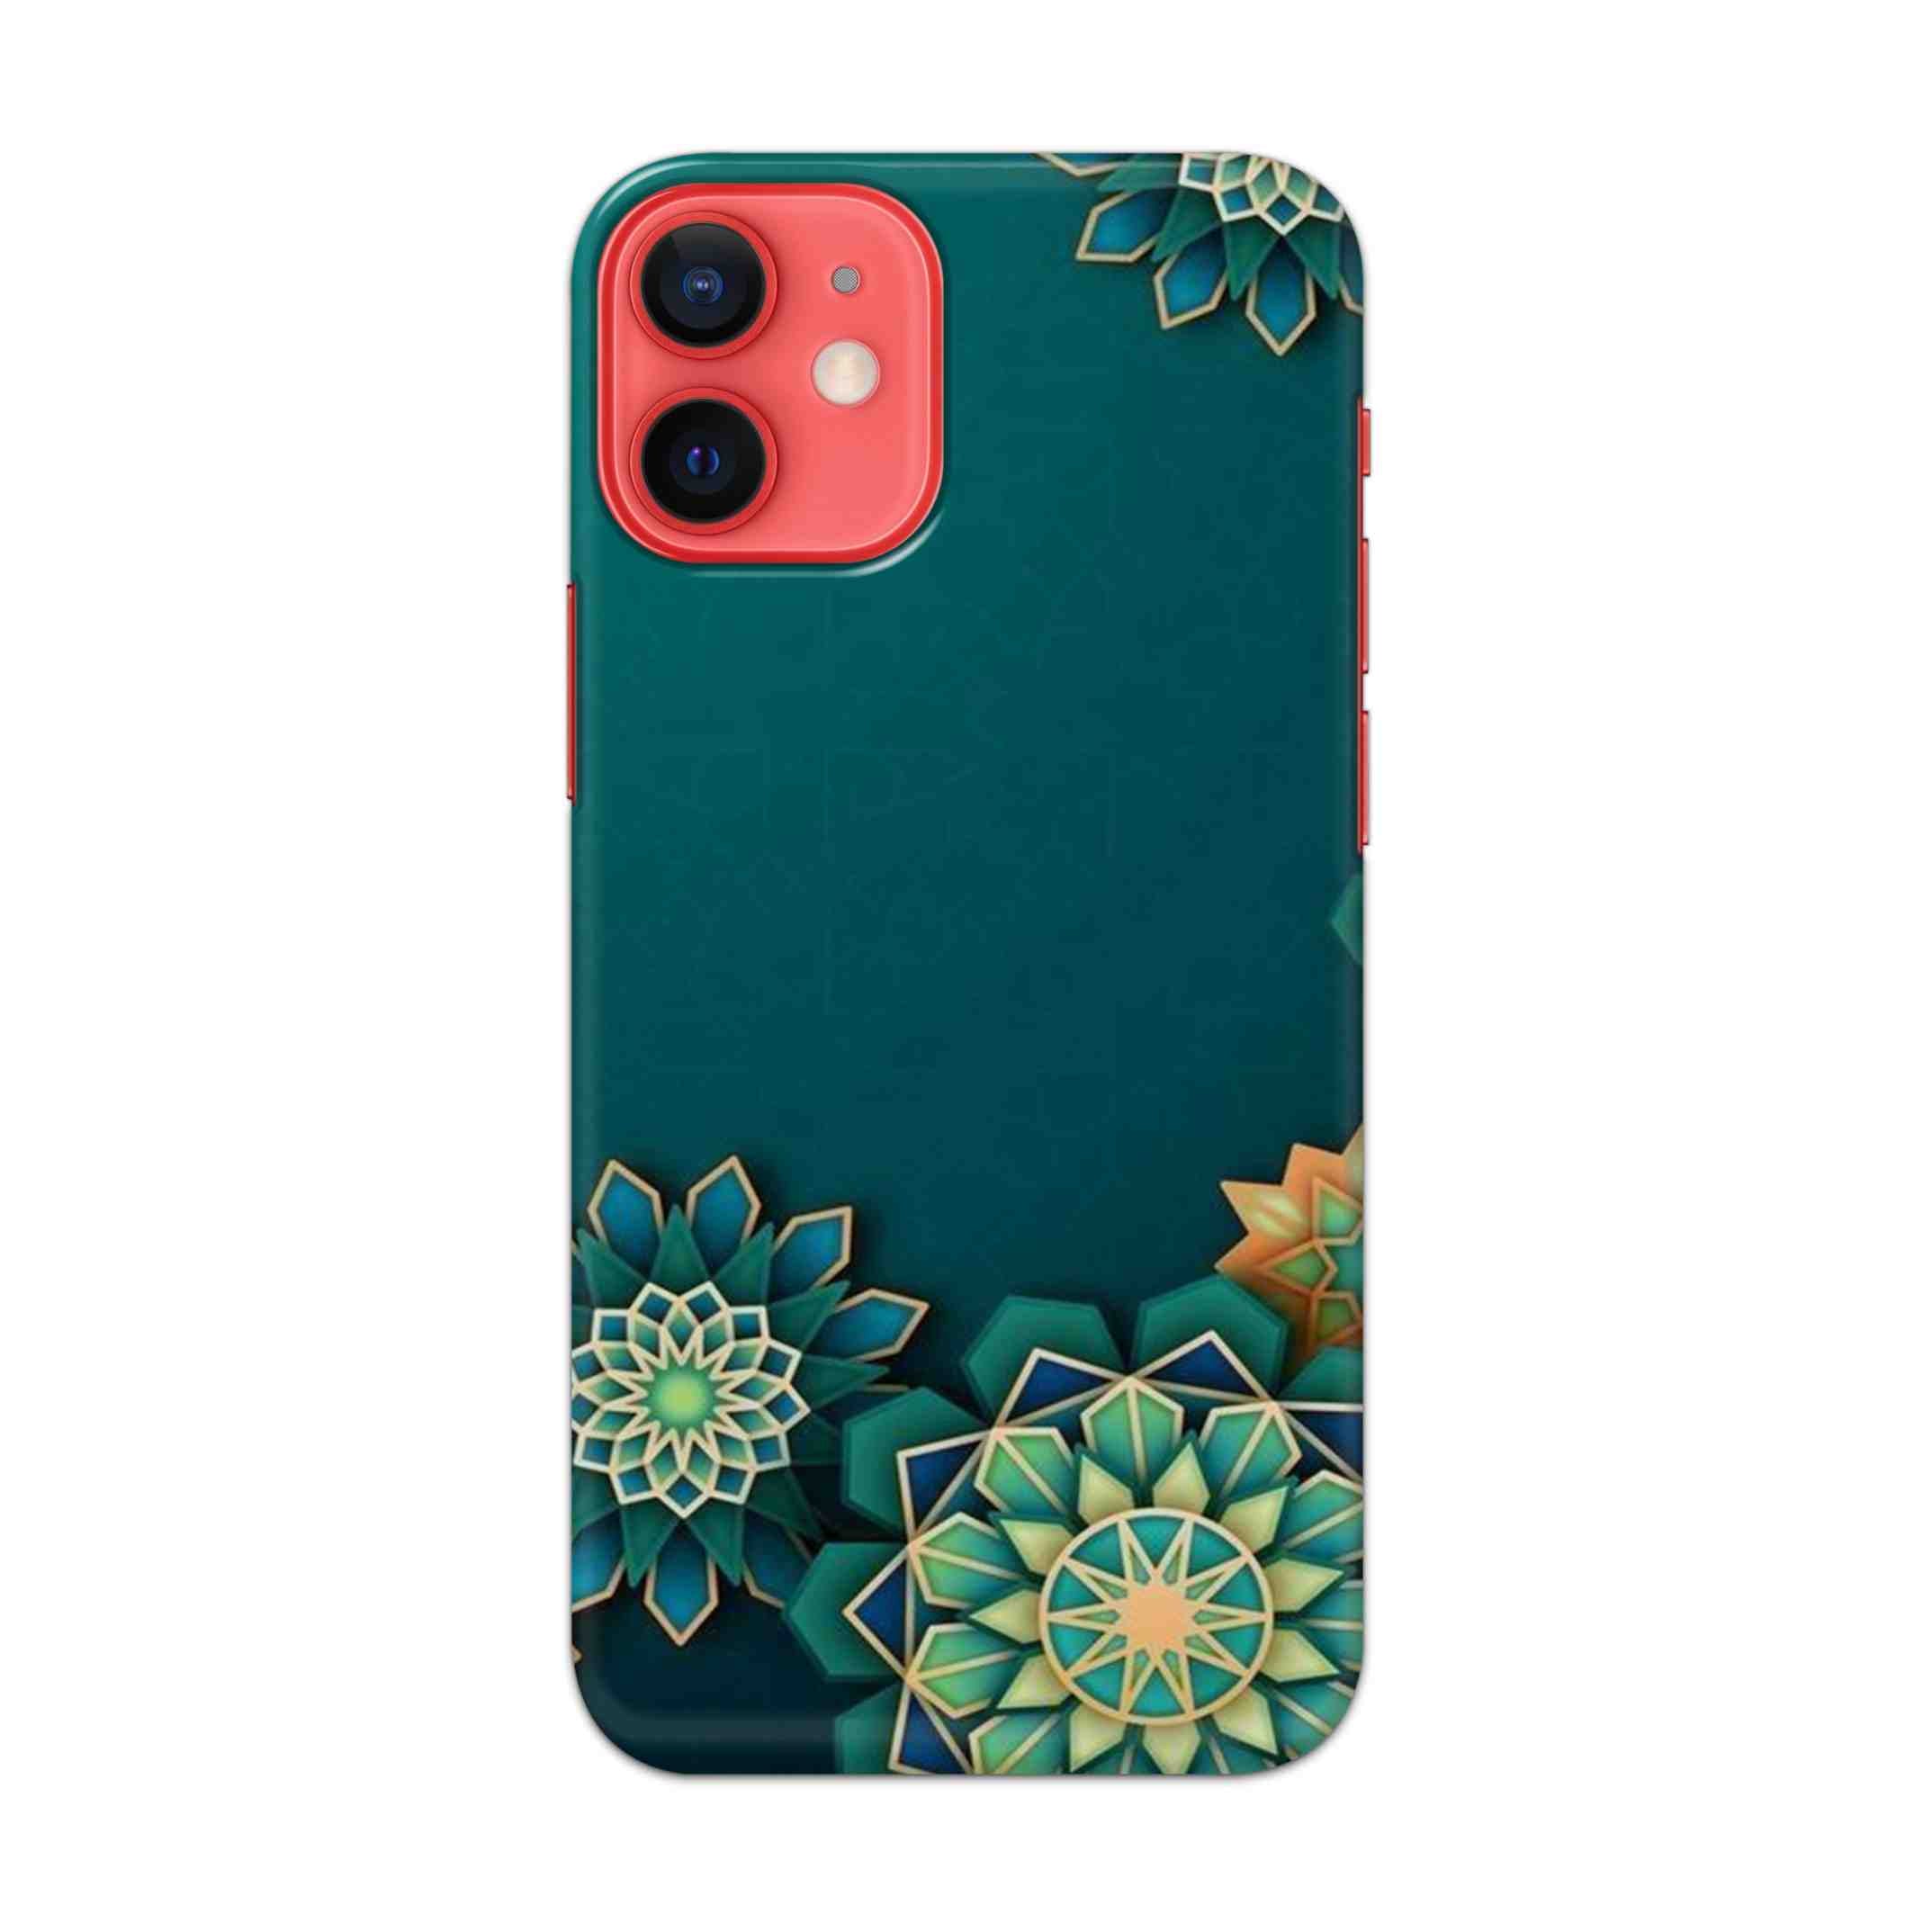 Buy Green Flower Hard Back Mobile Phone Case/Cover For Apple iPhone 12 mini Online